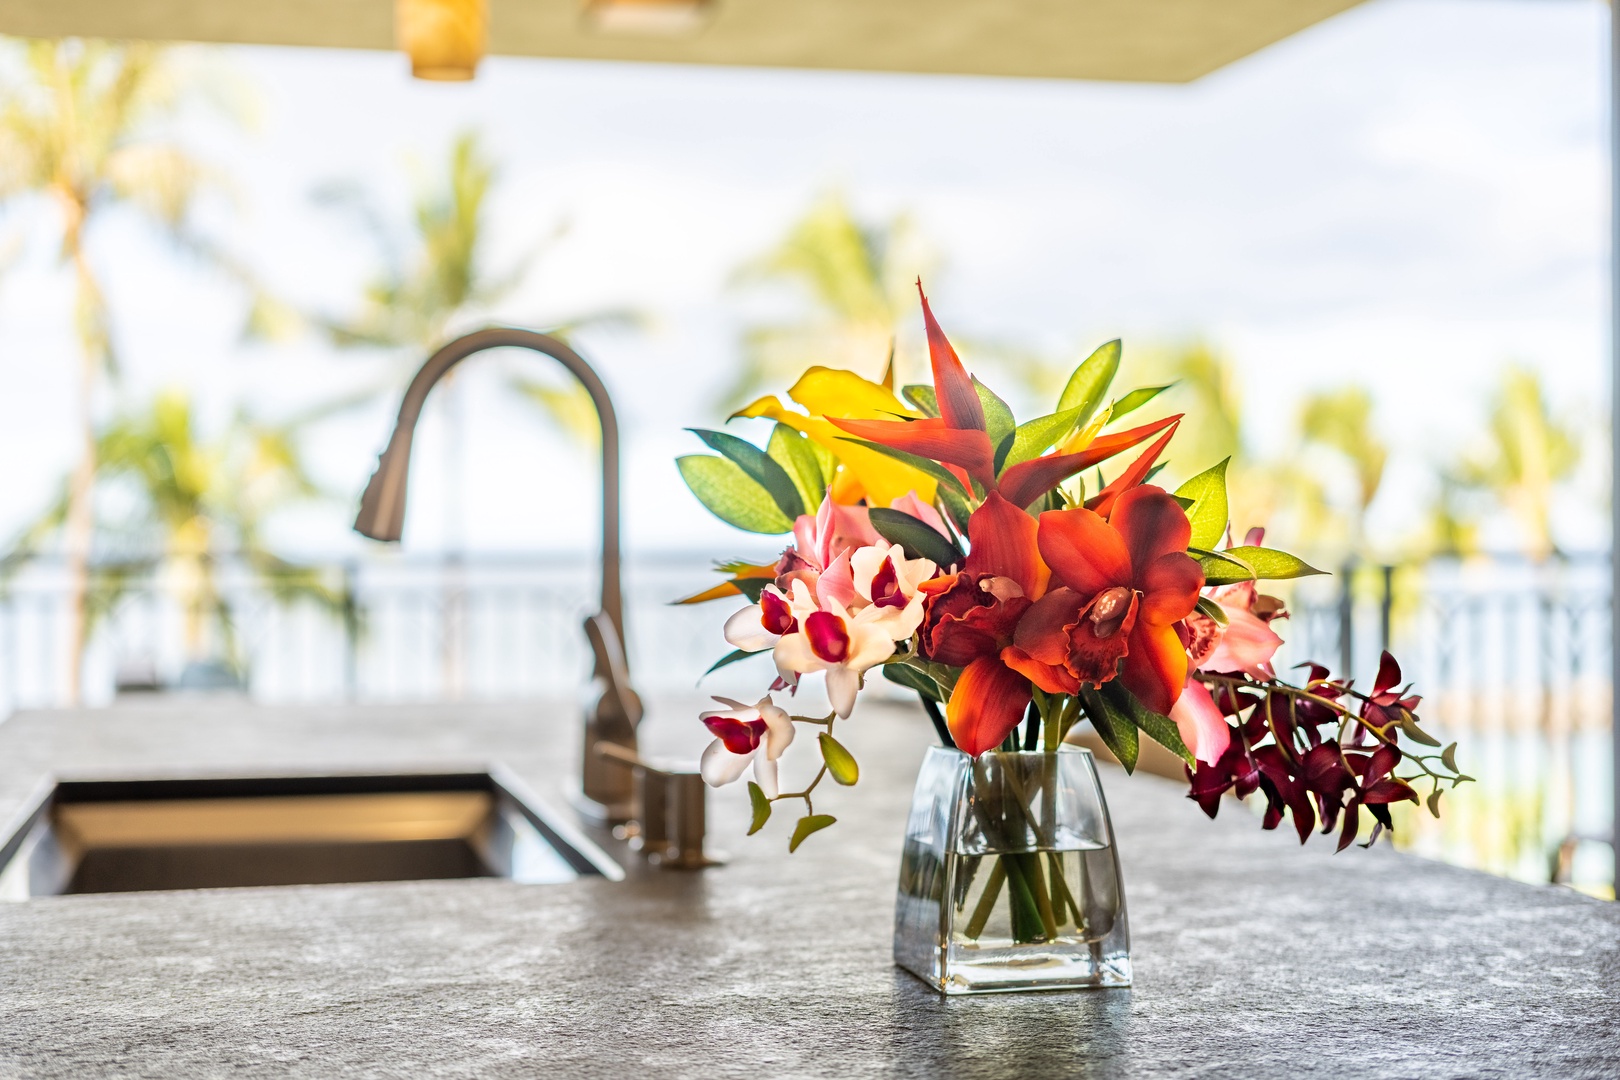 Kapolei Vacation Rentals, Ko Olina Beach Villas B309 - Enjoy tropical flowers and island time.